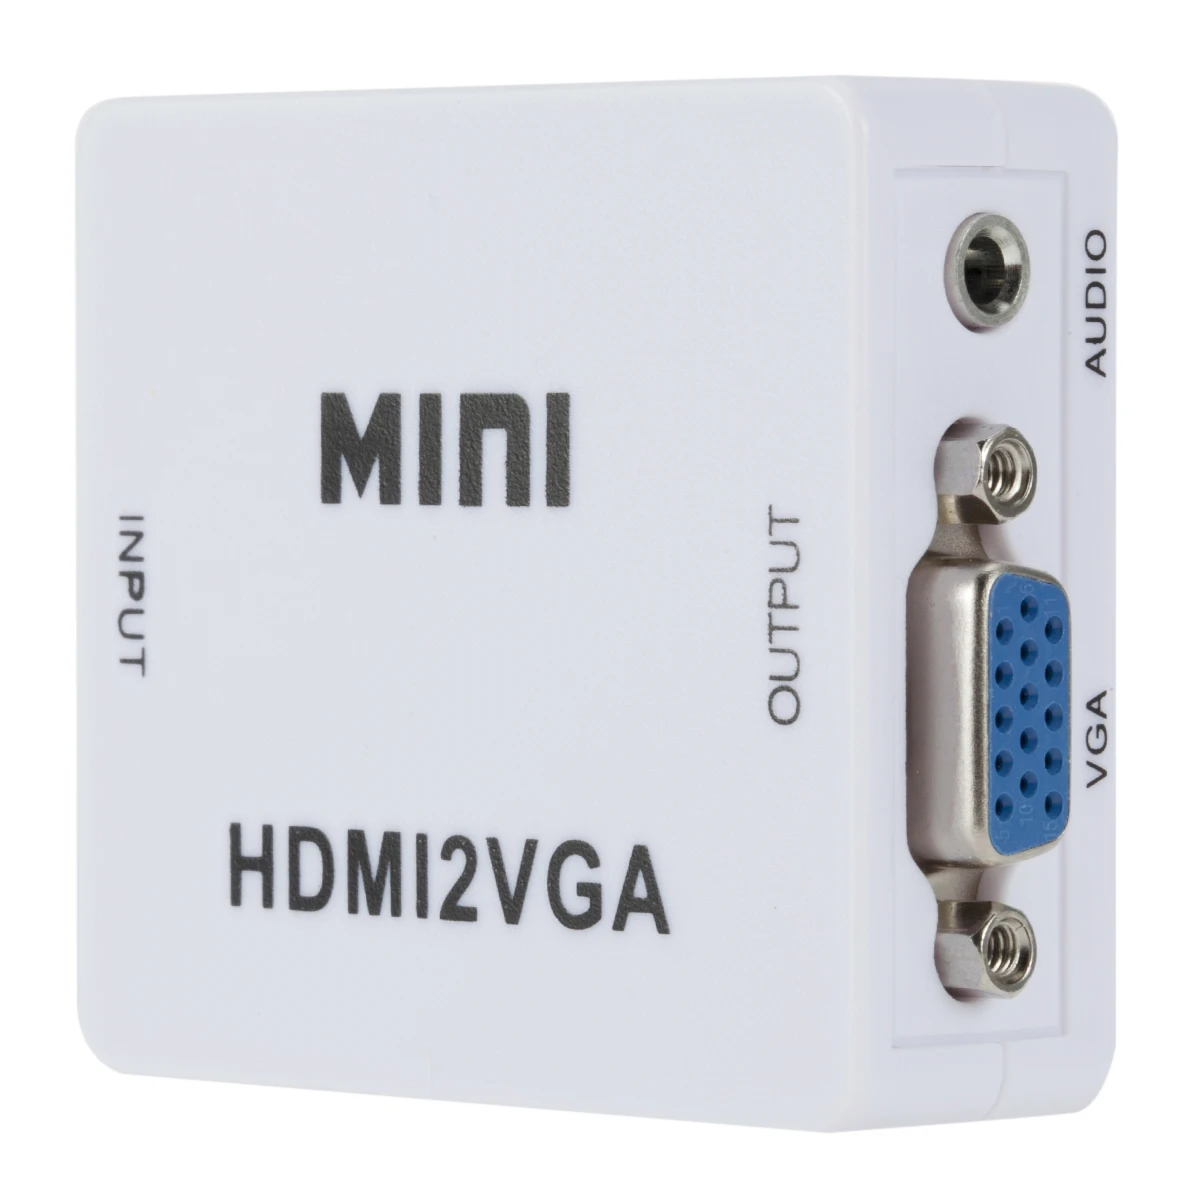 HD 1080P мини HDMI к VGA конвертер с Аудио HDMI к VGA видео коробка адаптер для Xbox360 PC DVD PS3 - Цвет: Белый